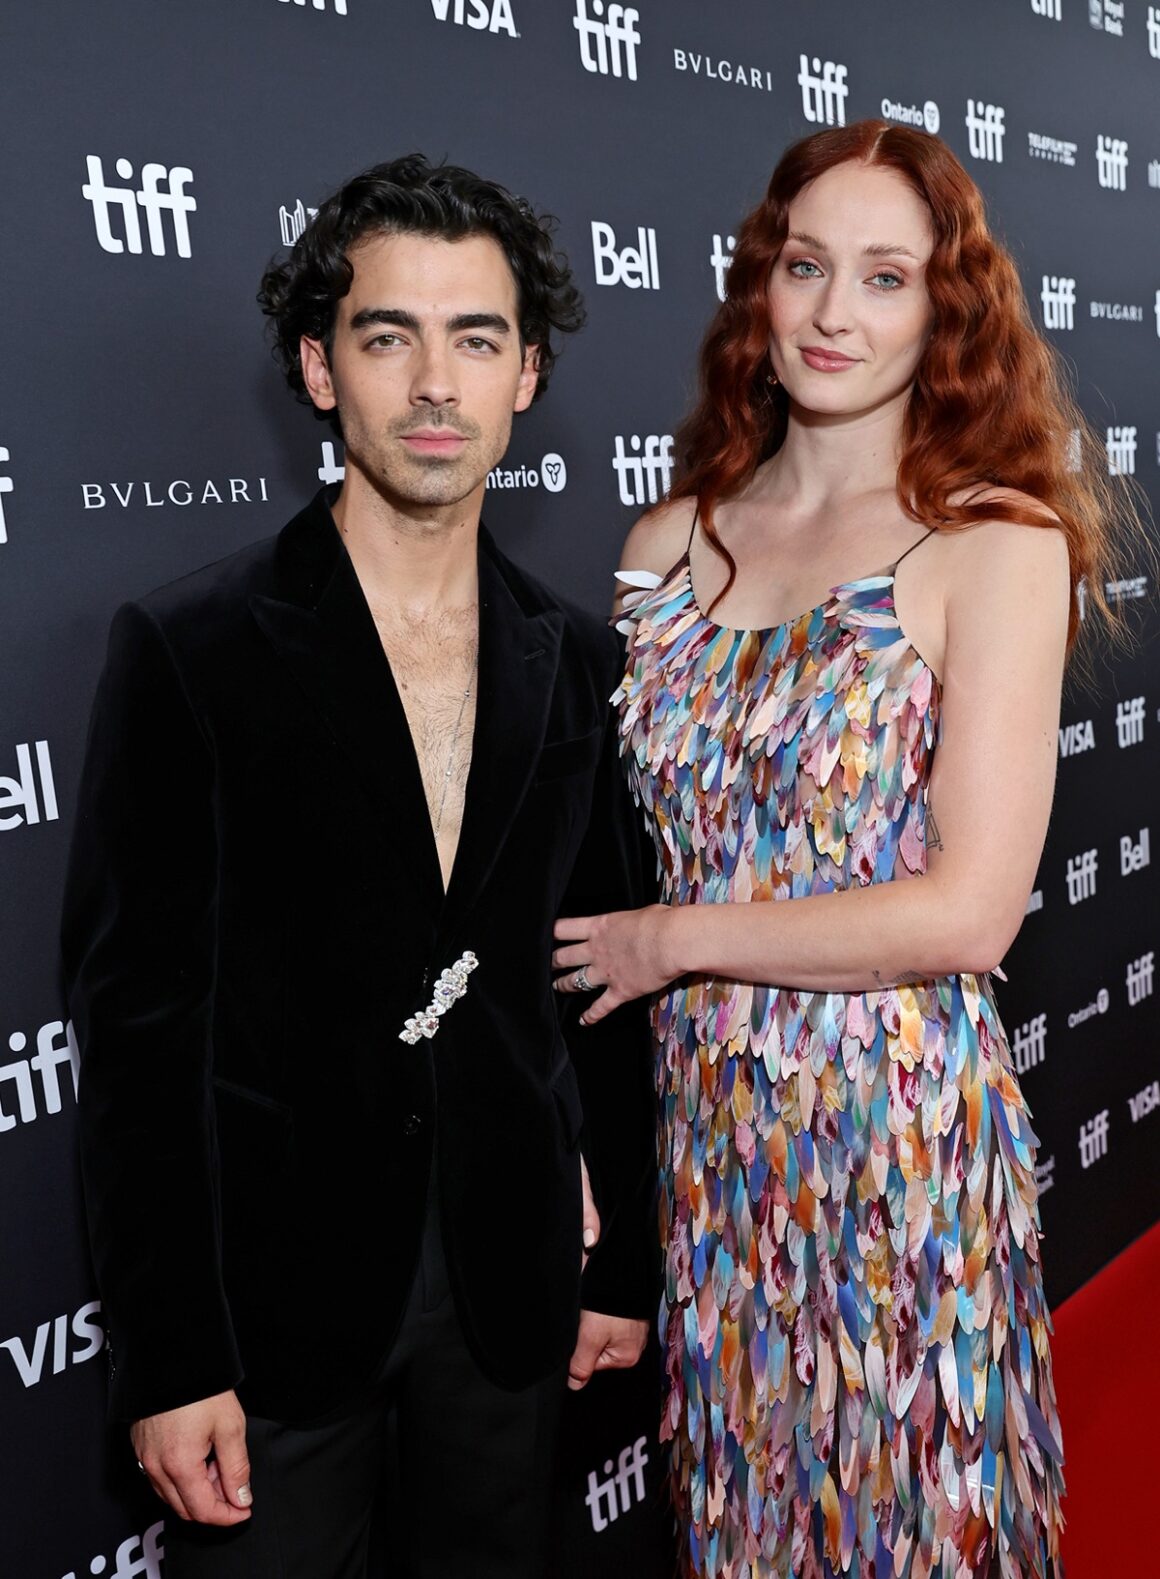 Joe Jonas and Sophie Turner 2022 Toronto International Film Festival - "Devotion" Premiere